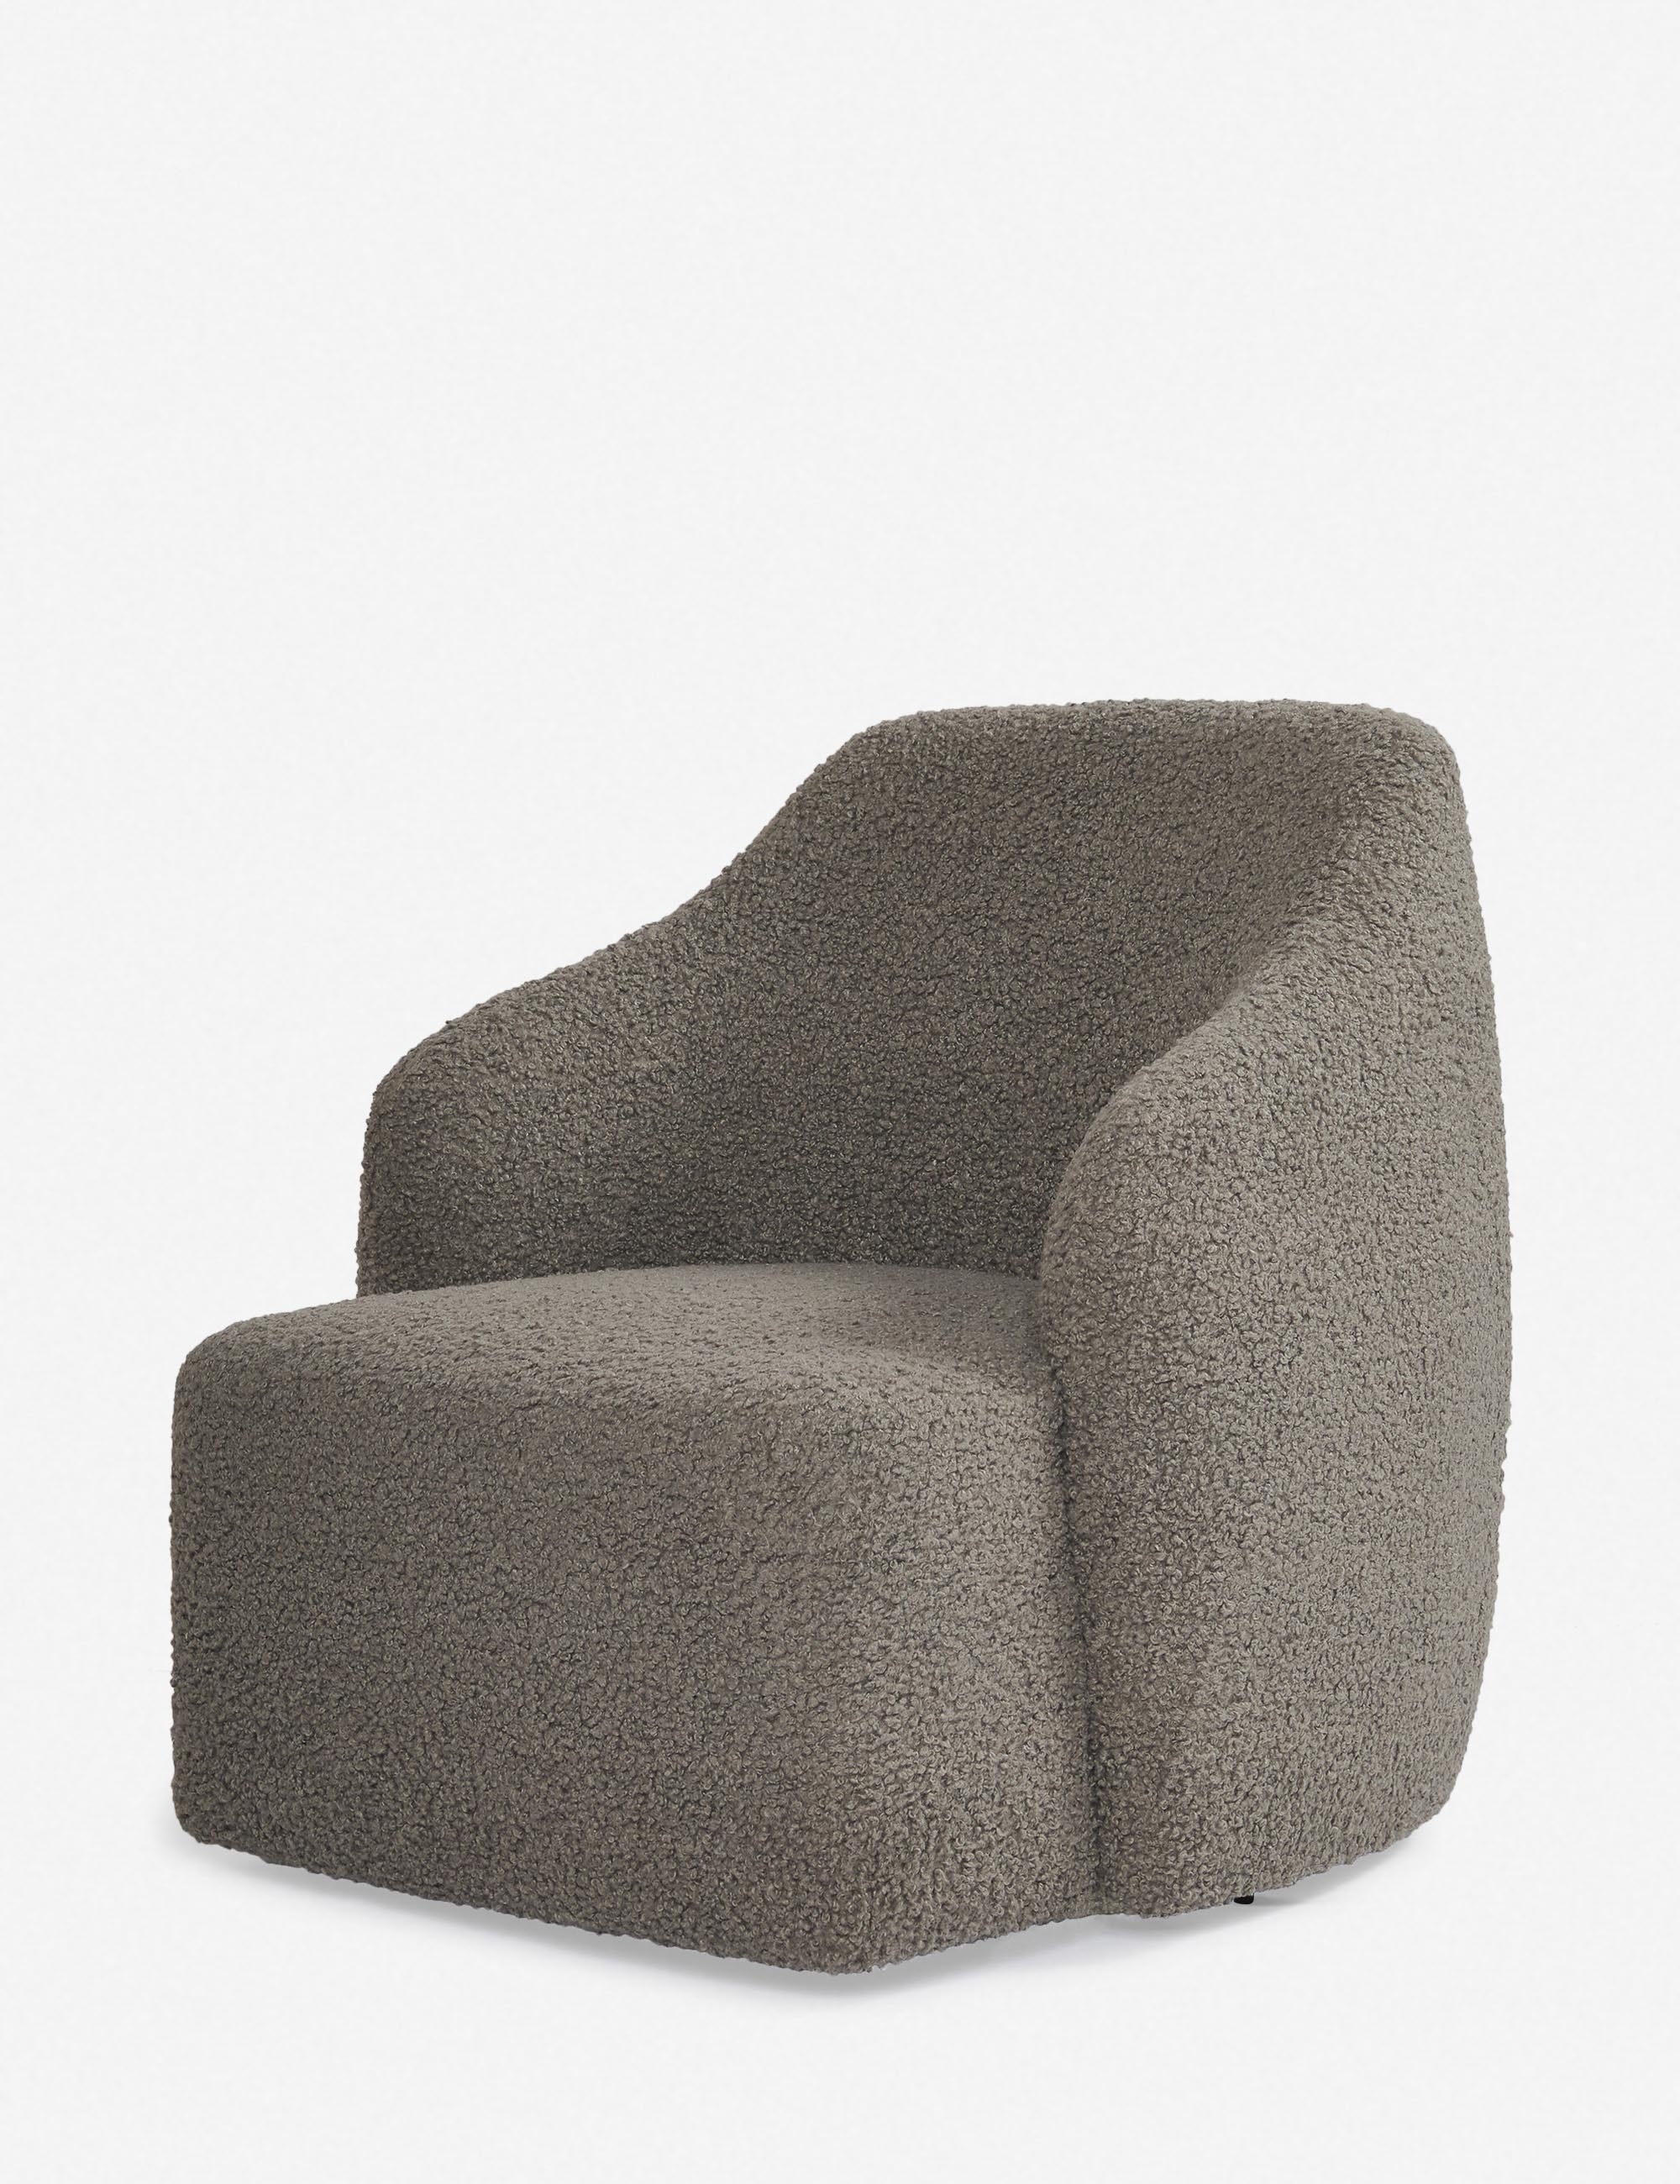 Tobi Swivel Chair, Gray - Image 6